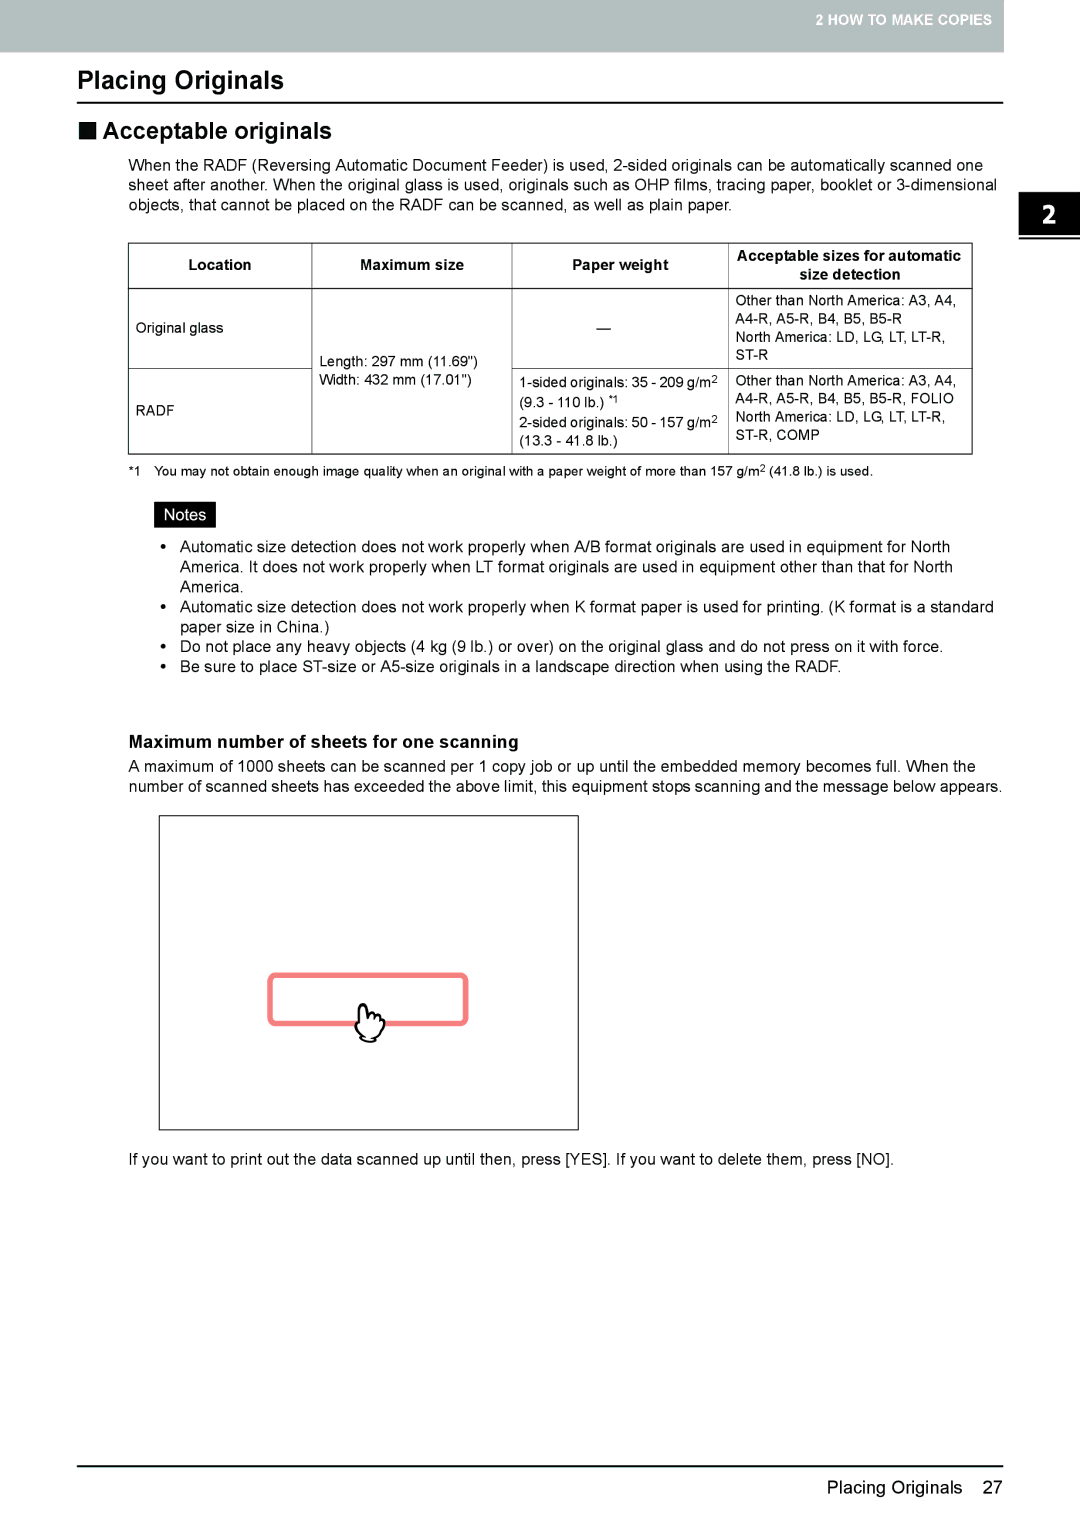 Toshiba e-STUDIO5520C, 6520c manual Placing Originals, „ Acceptable originals, Maximum number of sheets for one scanning 